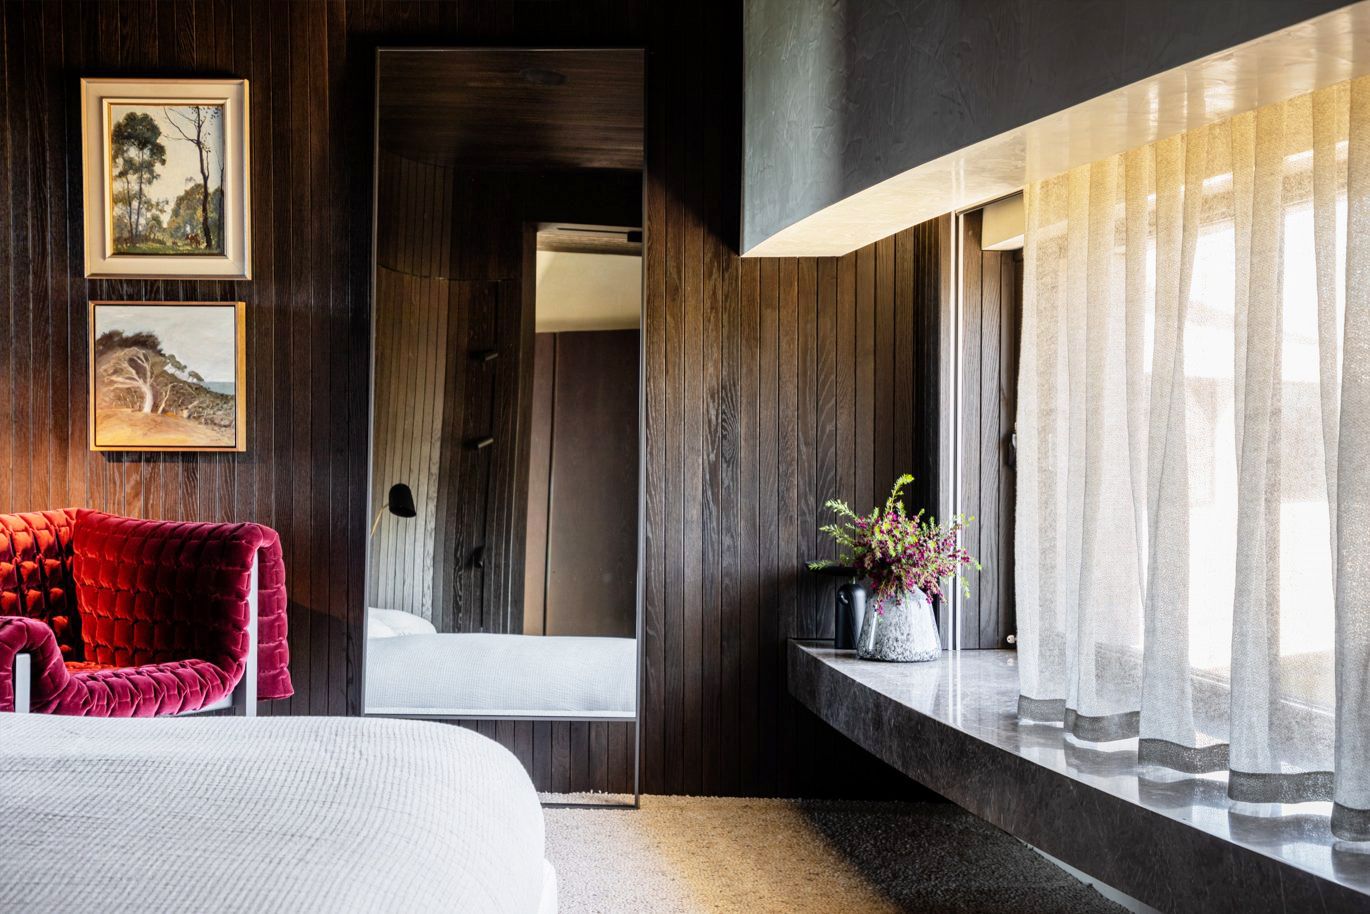 64 Stylish Bedroom Design Ideas Modern Bedrooms Decorating Tips